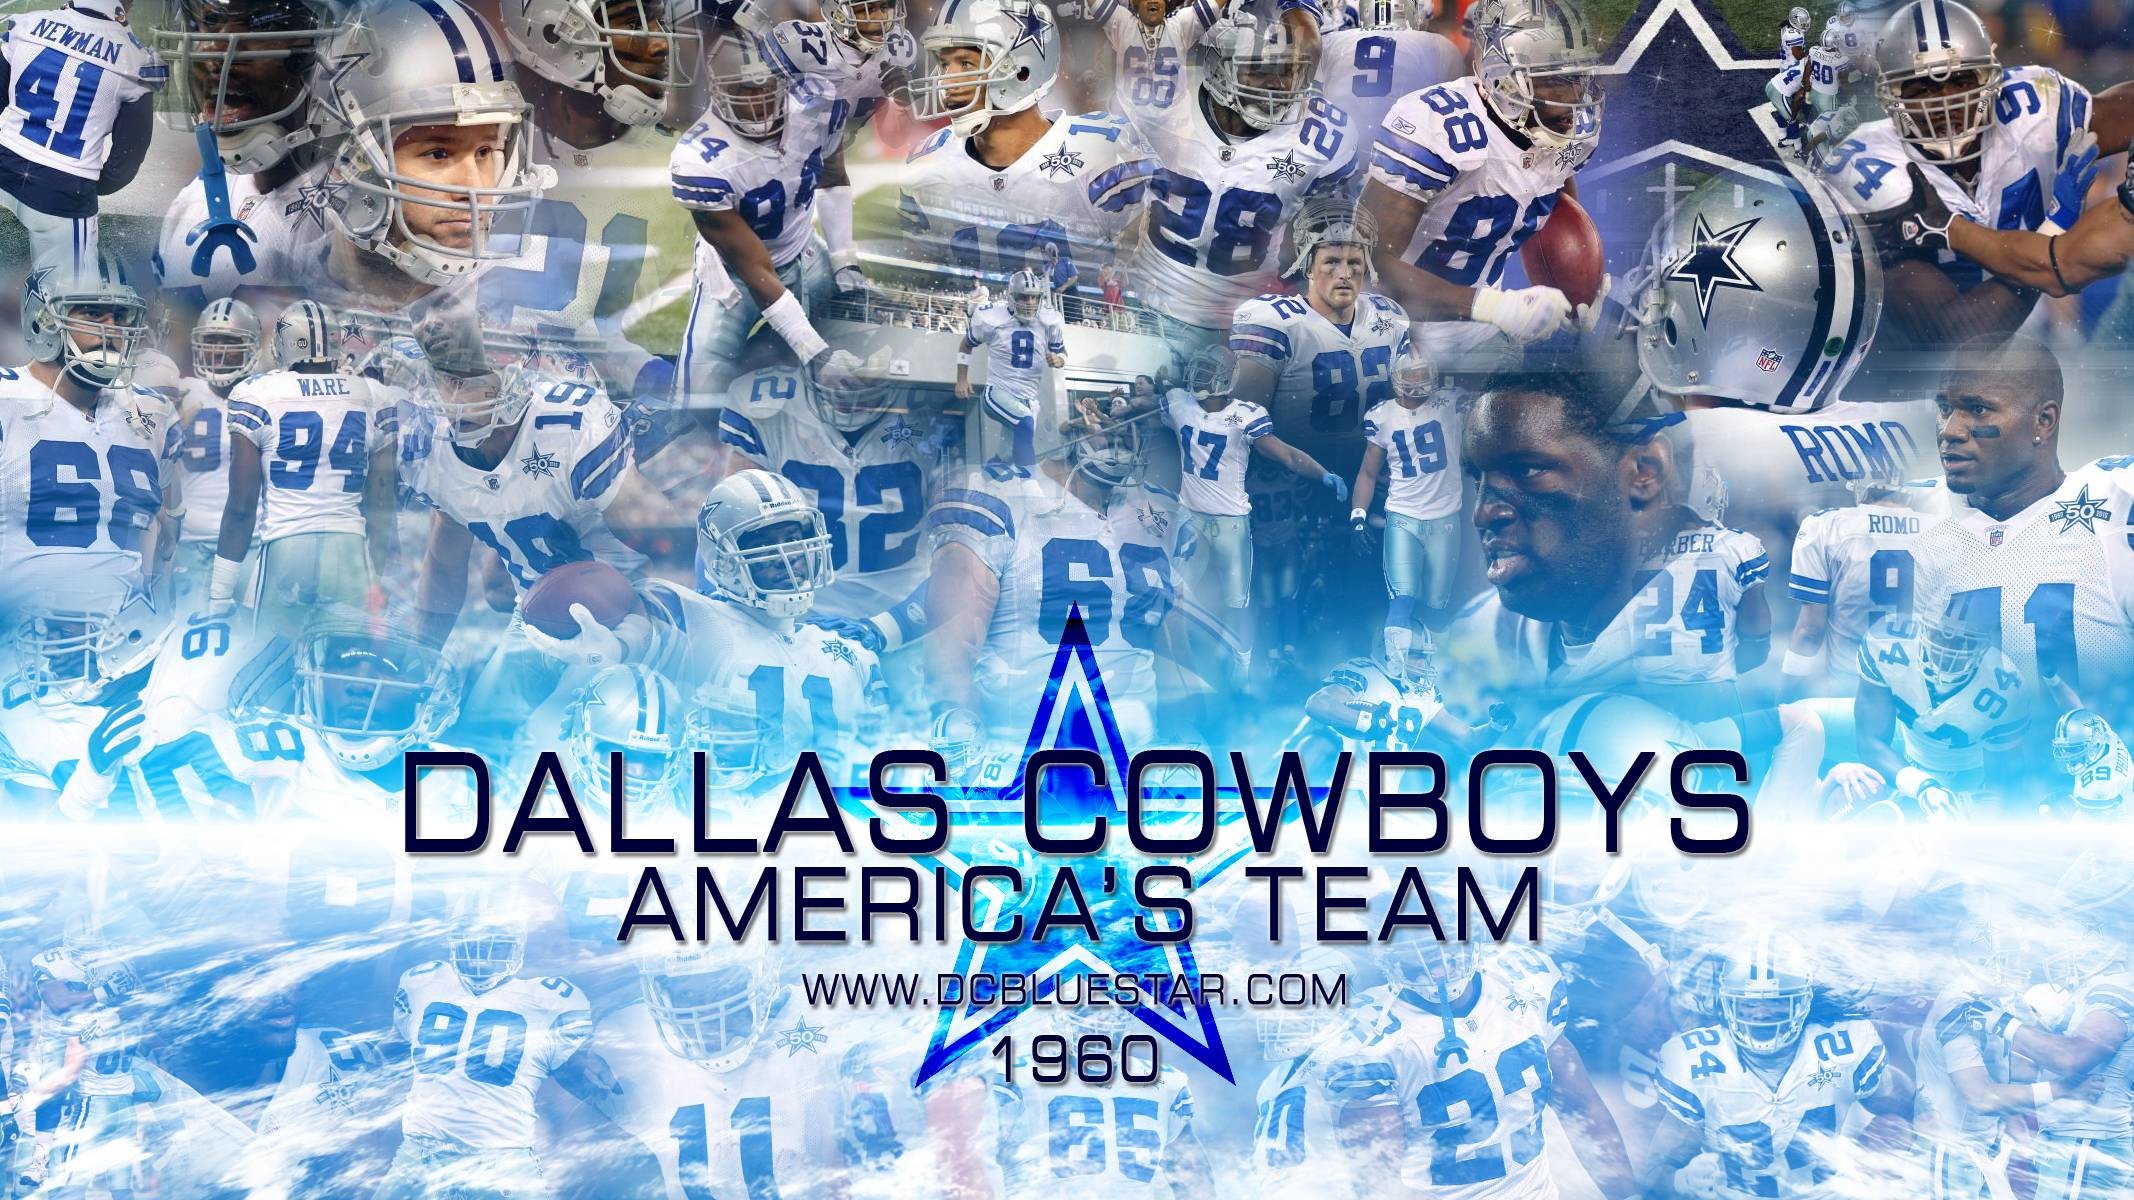 X American Football Dallas Cowboys Trophy Super Bowl HD Wallpapers Pinterest Dallas cowboys wallpaper, Hd wallpaper and Wallpaper